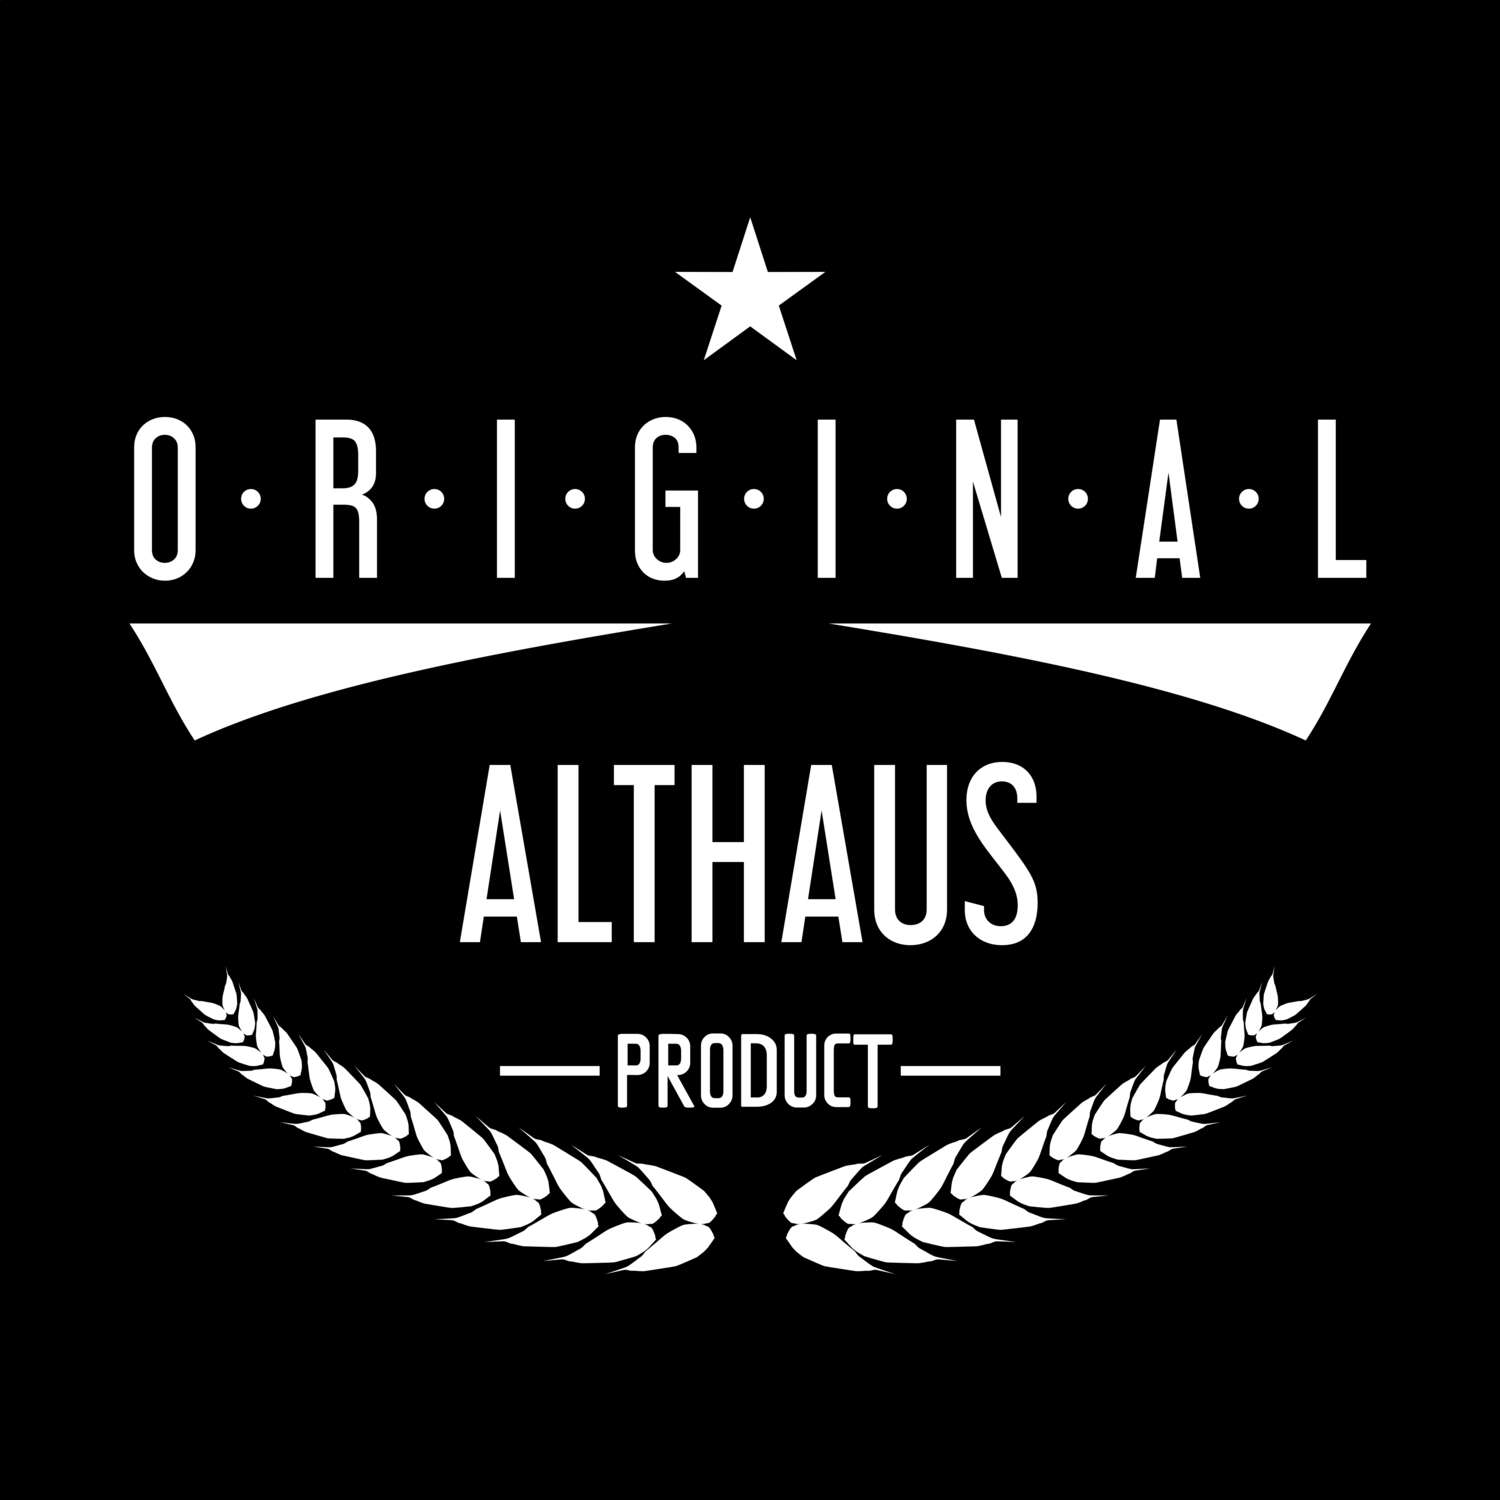 Althaus T-Shirt »Original Product«